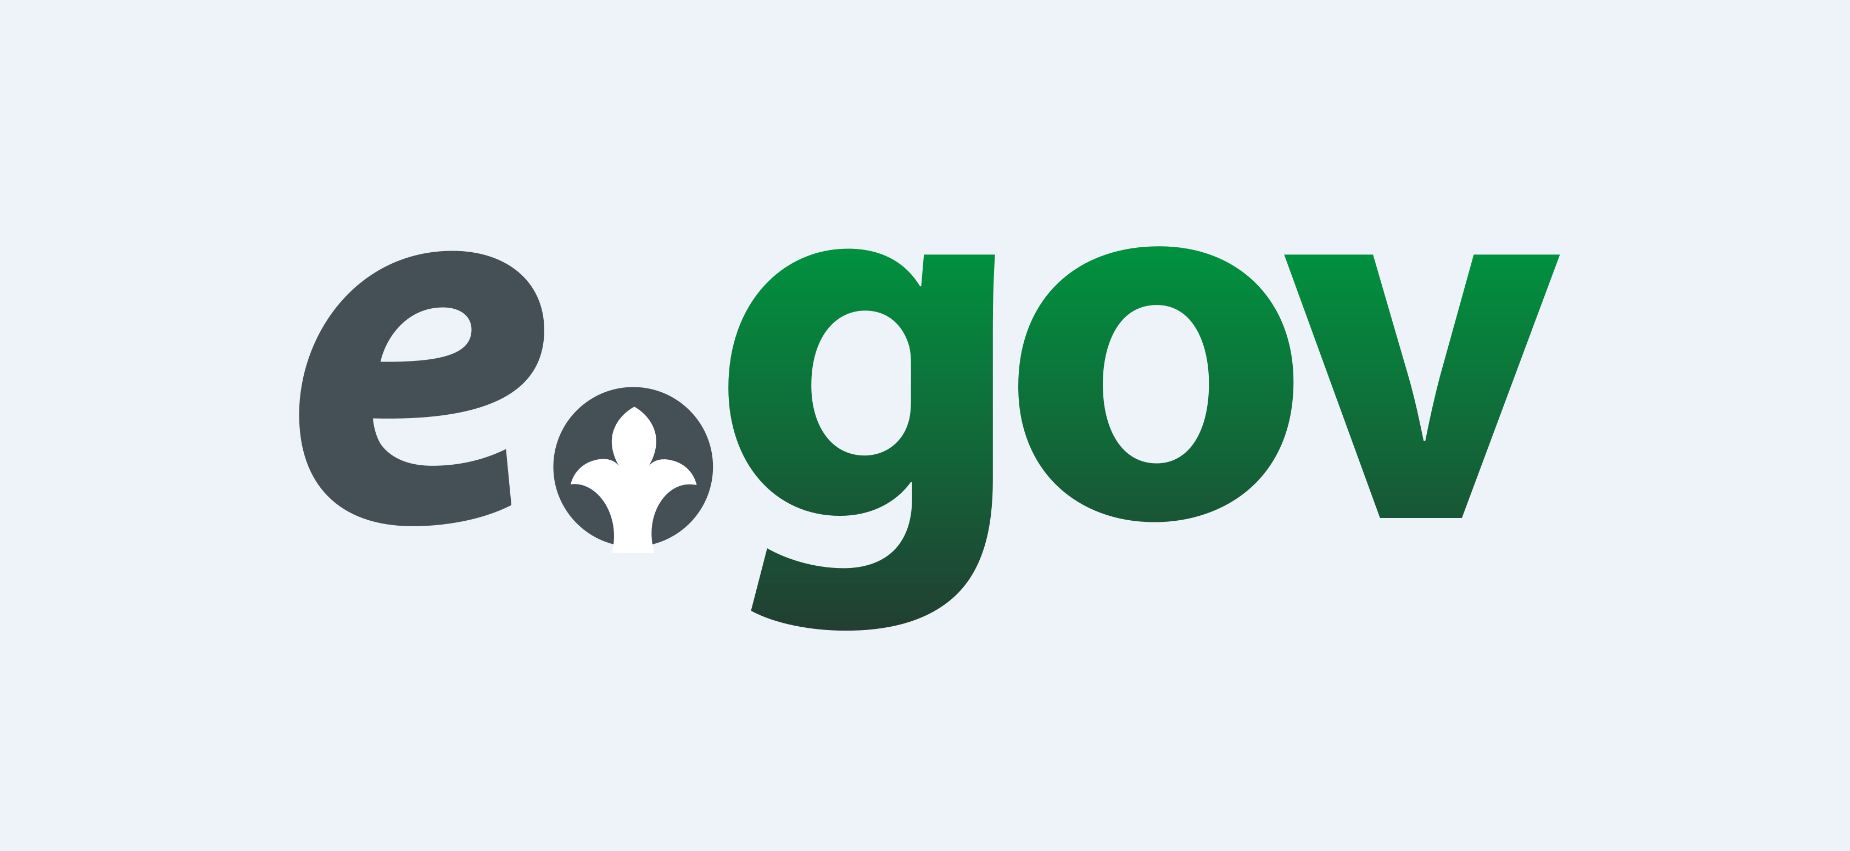 Https open gov. Егов. Электронное правительство РК. Портал EGOV. E.gov логотип.